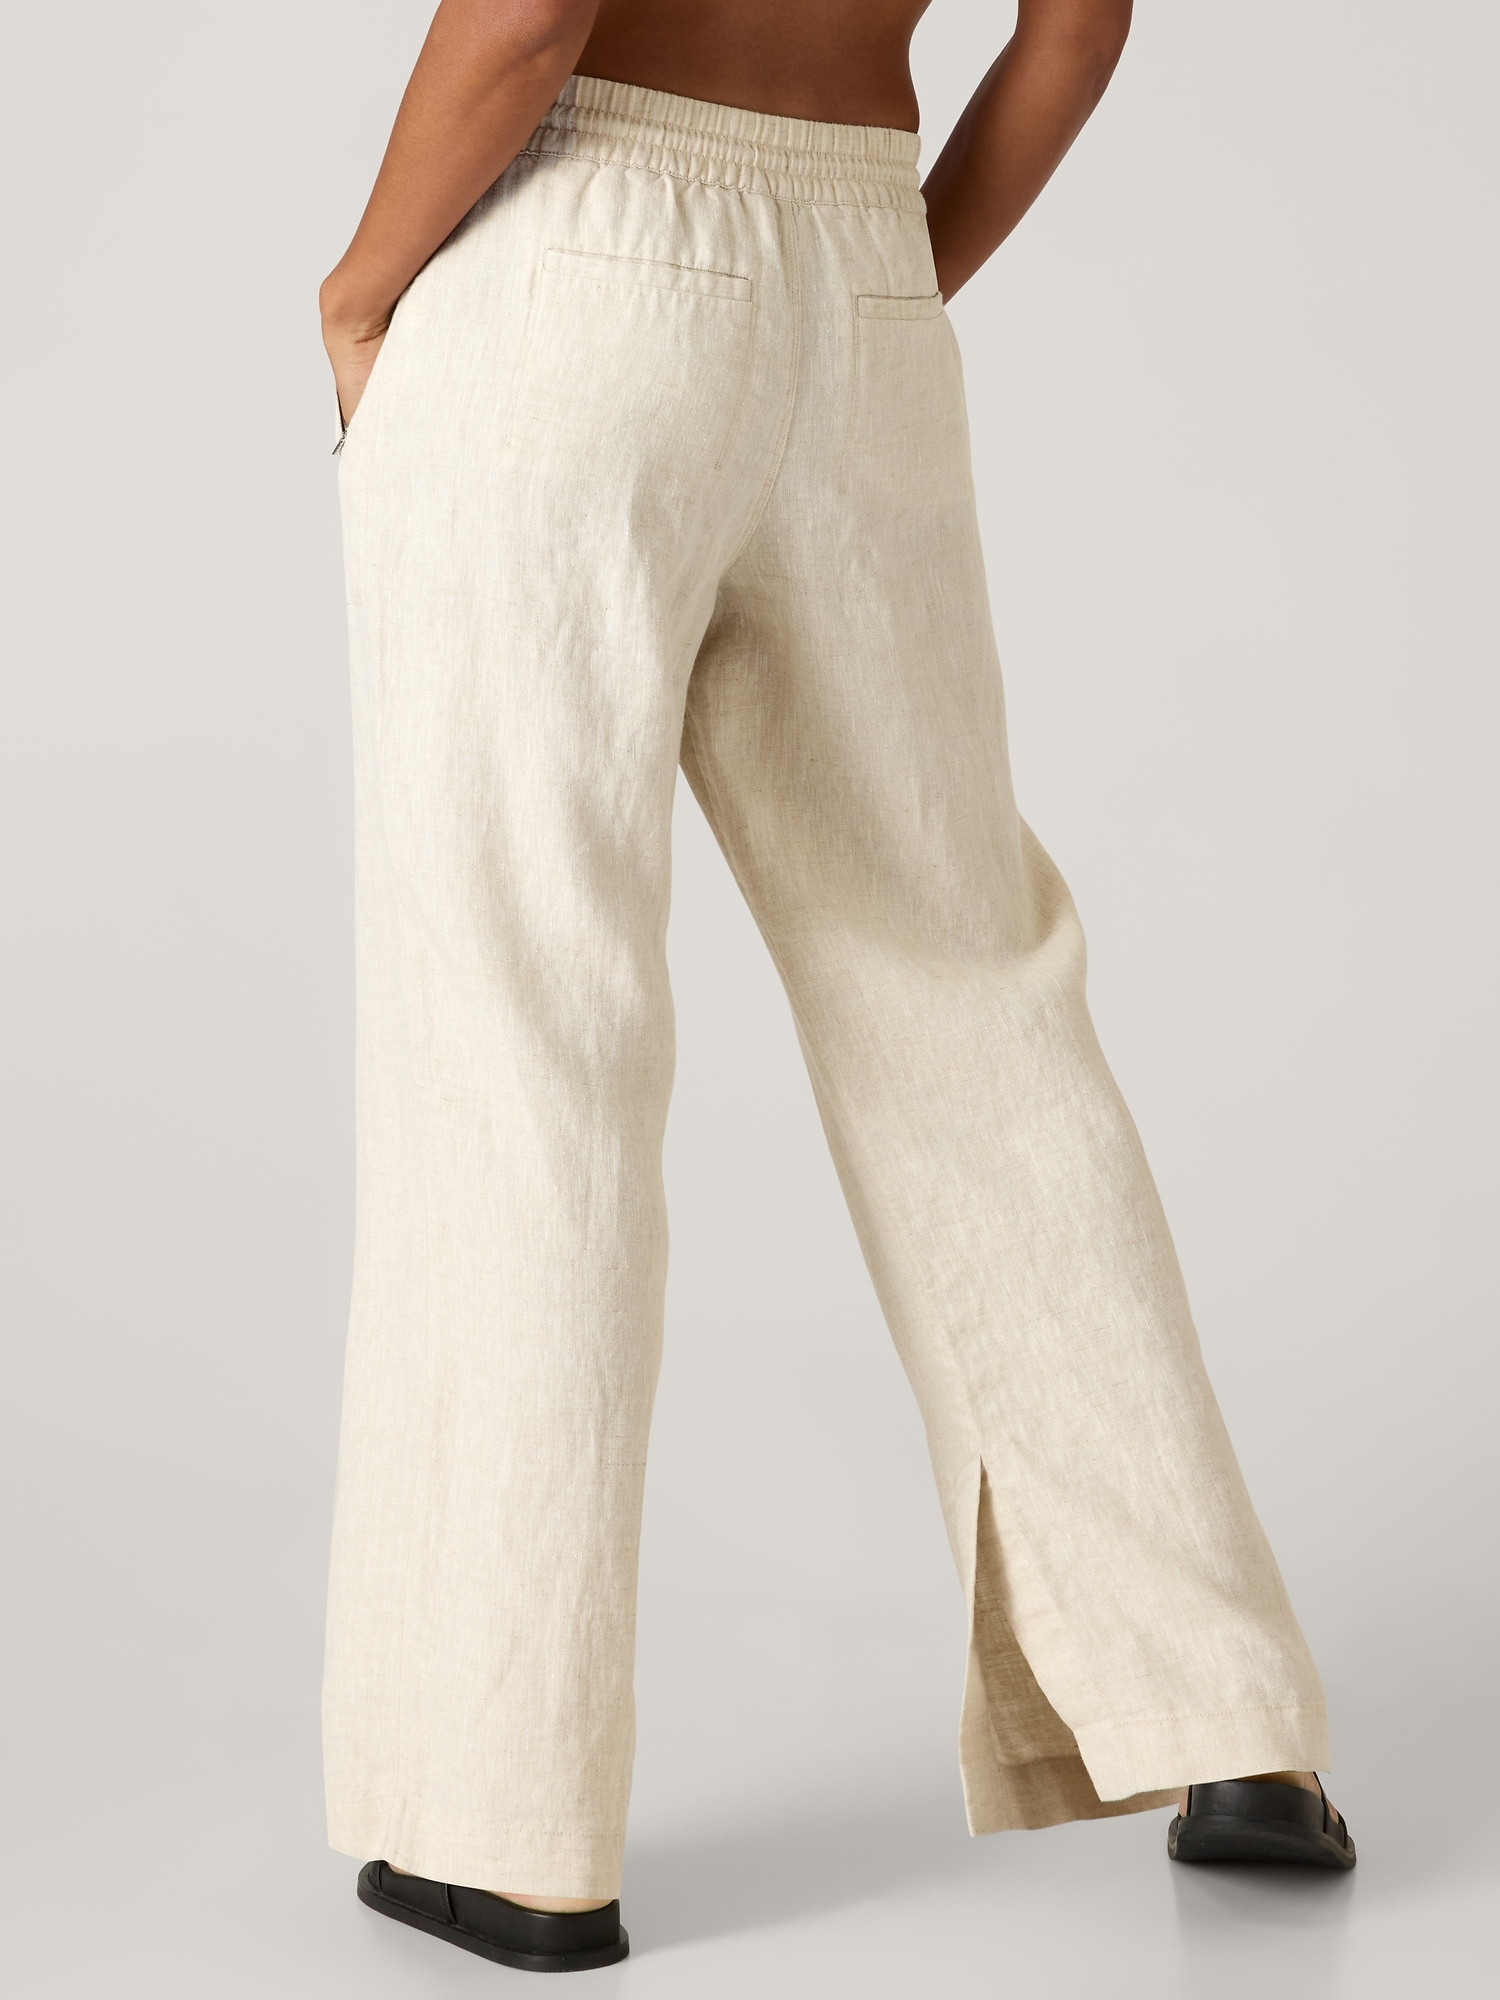 Wrap Linen Pants NASSAU in White Side Split Pants Wide Leg Pants High Rise  Elastic Waist Linen Trousers -  Canada